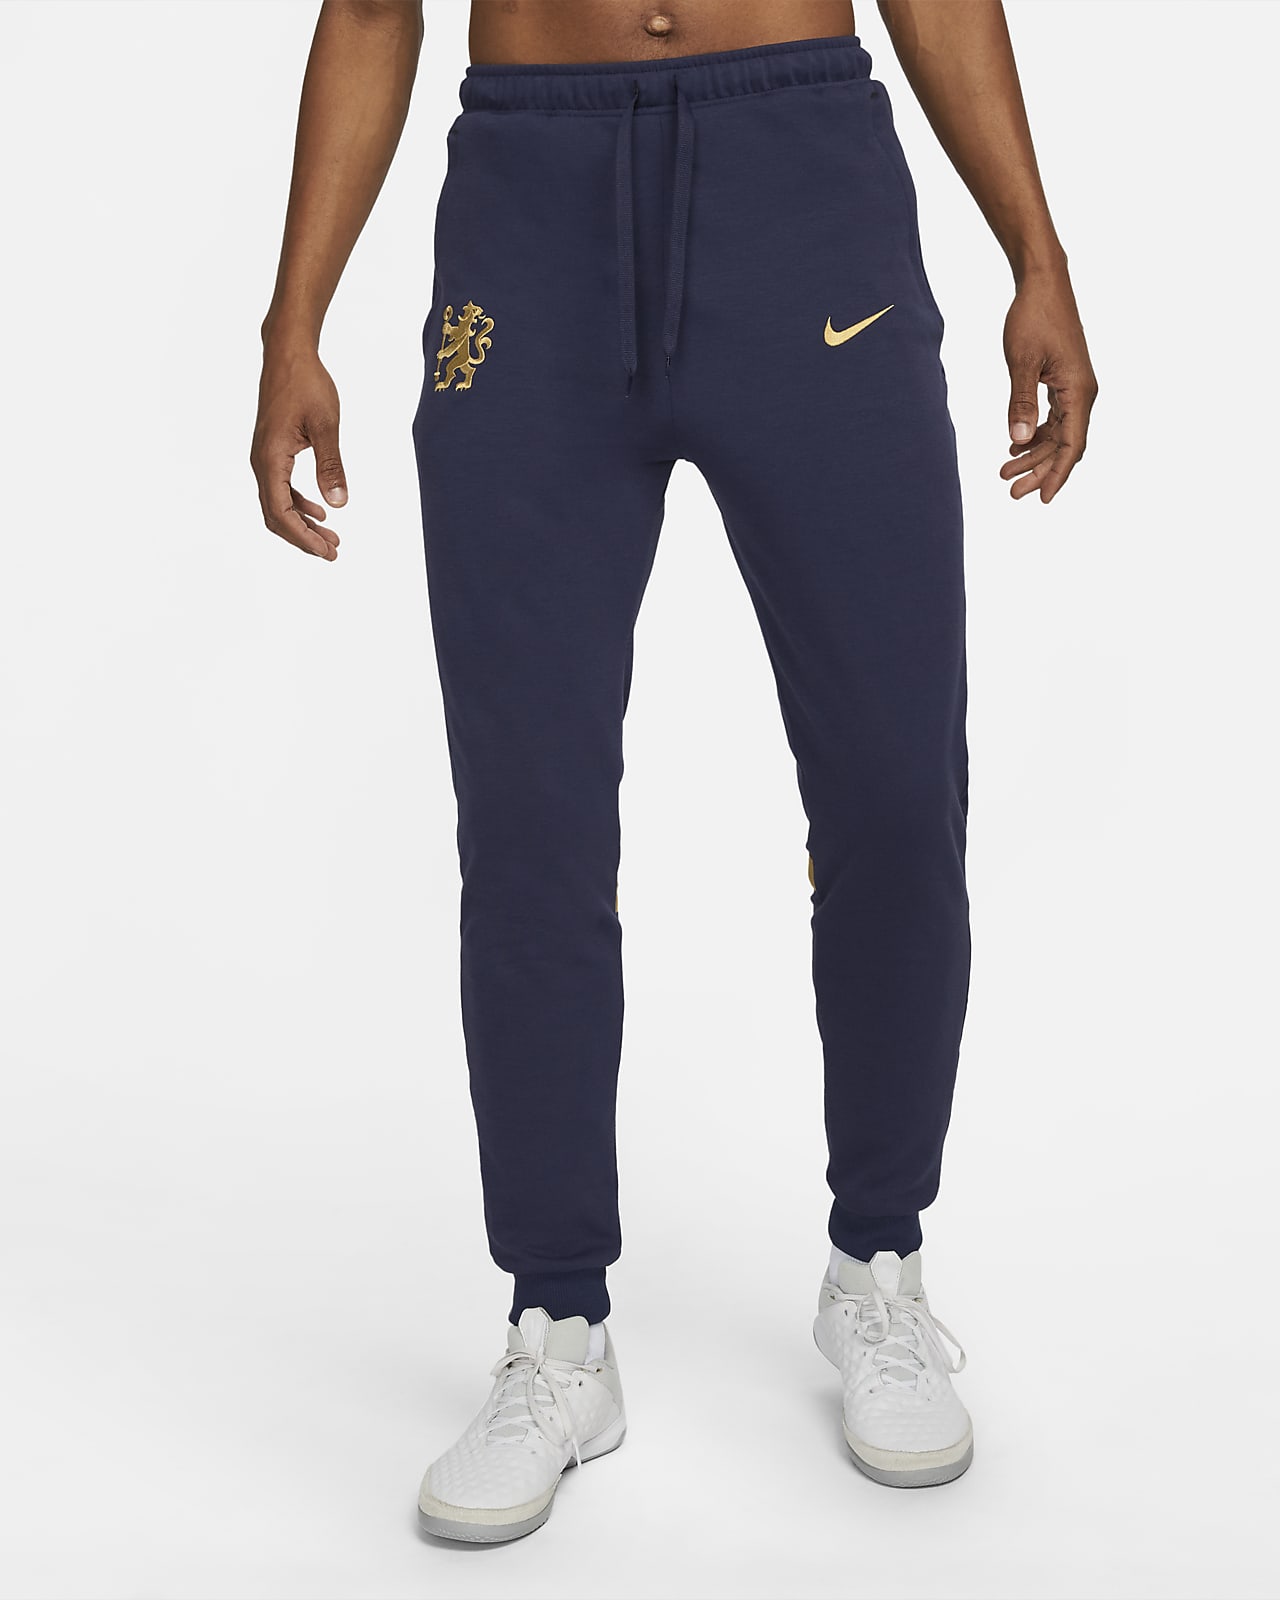 Confundir Gigante romano Pantalones de fútbol Nike Dri-FIT para hombre Chelsea FC. Nike.com